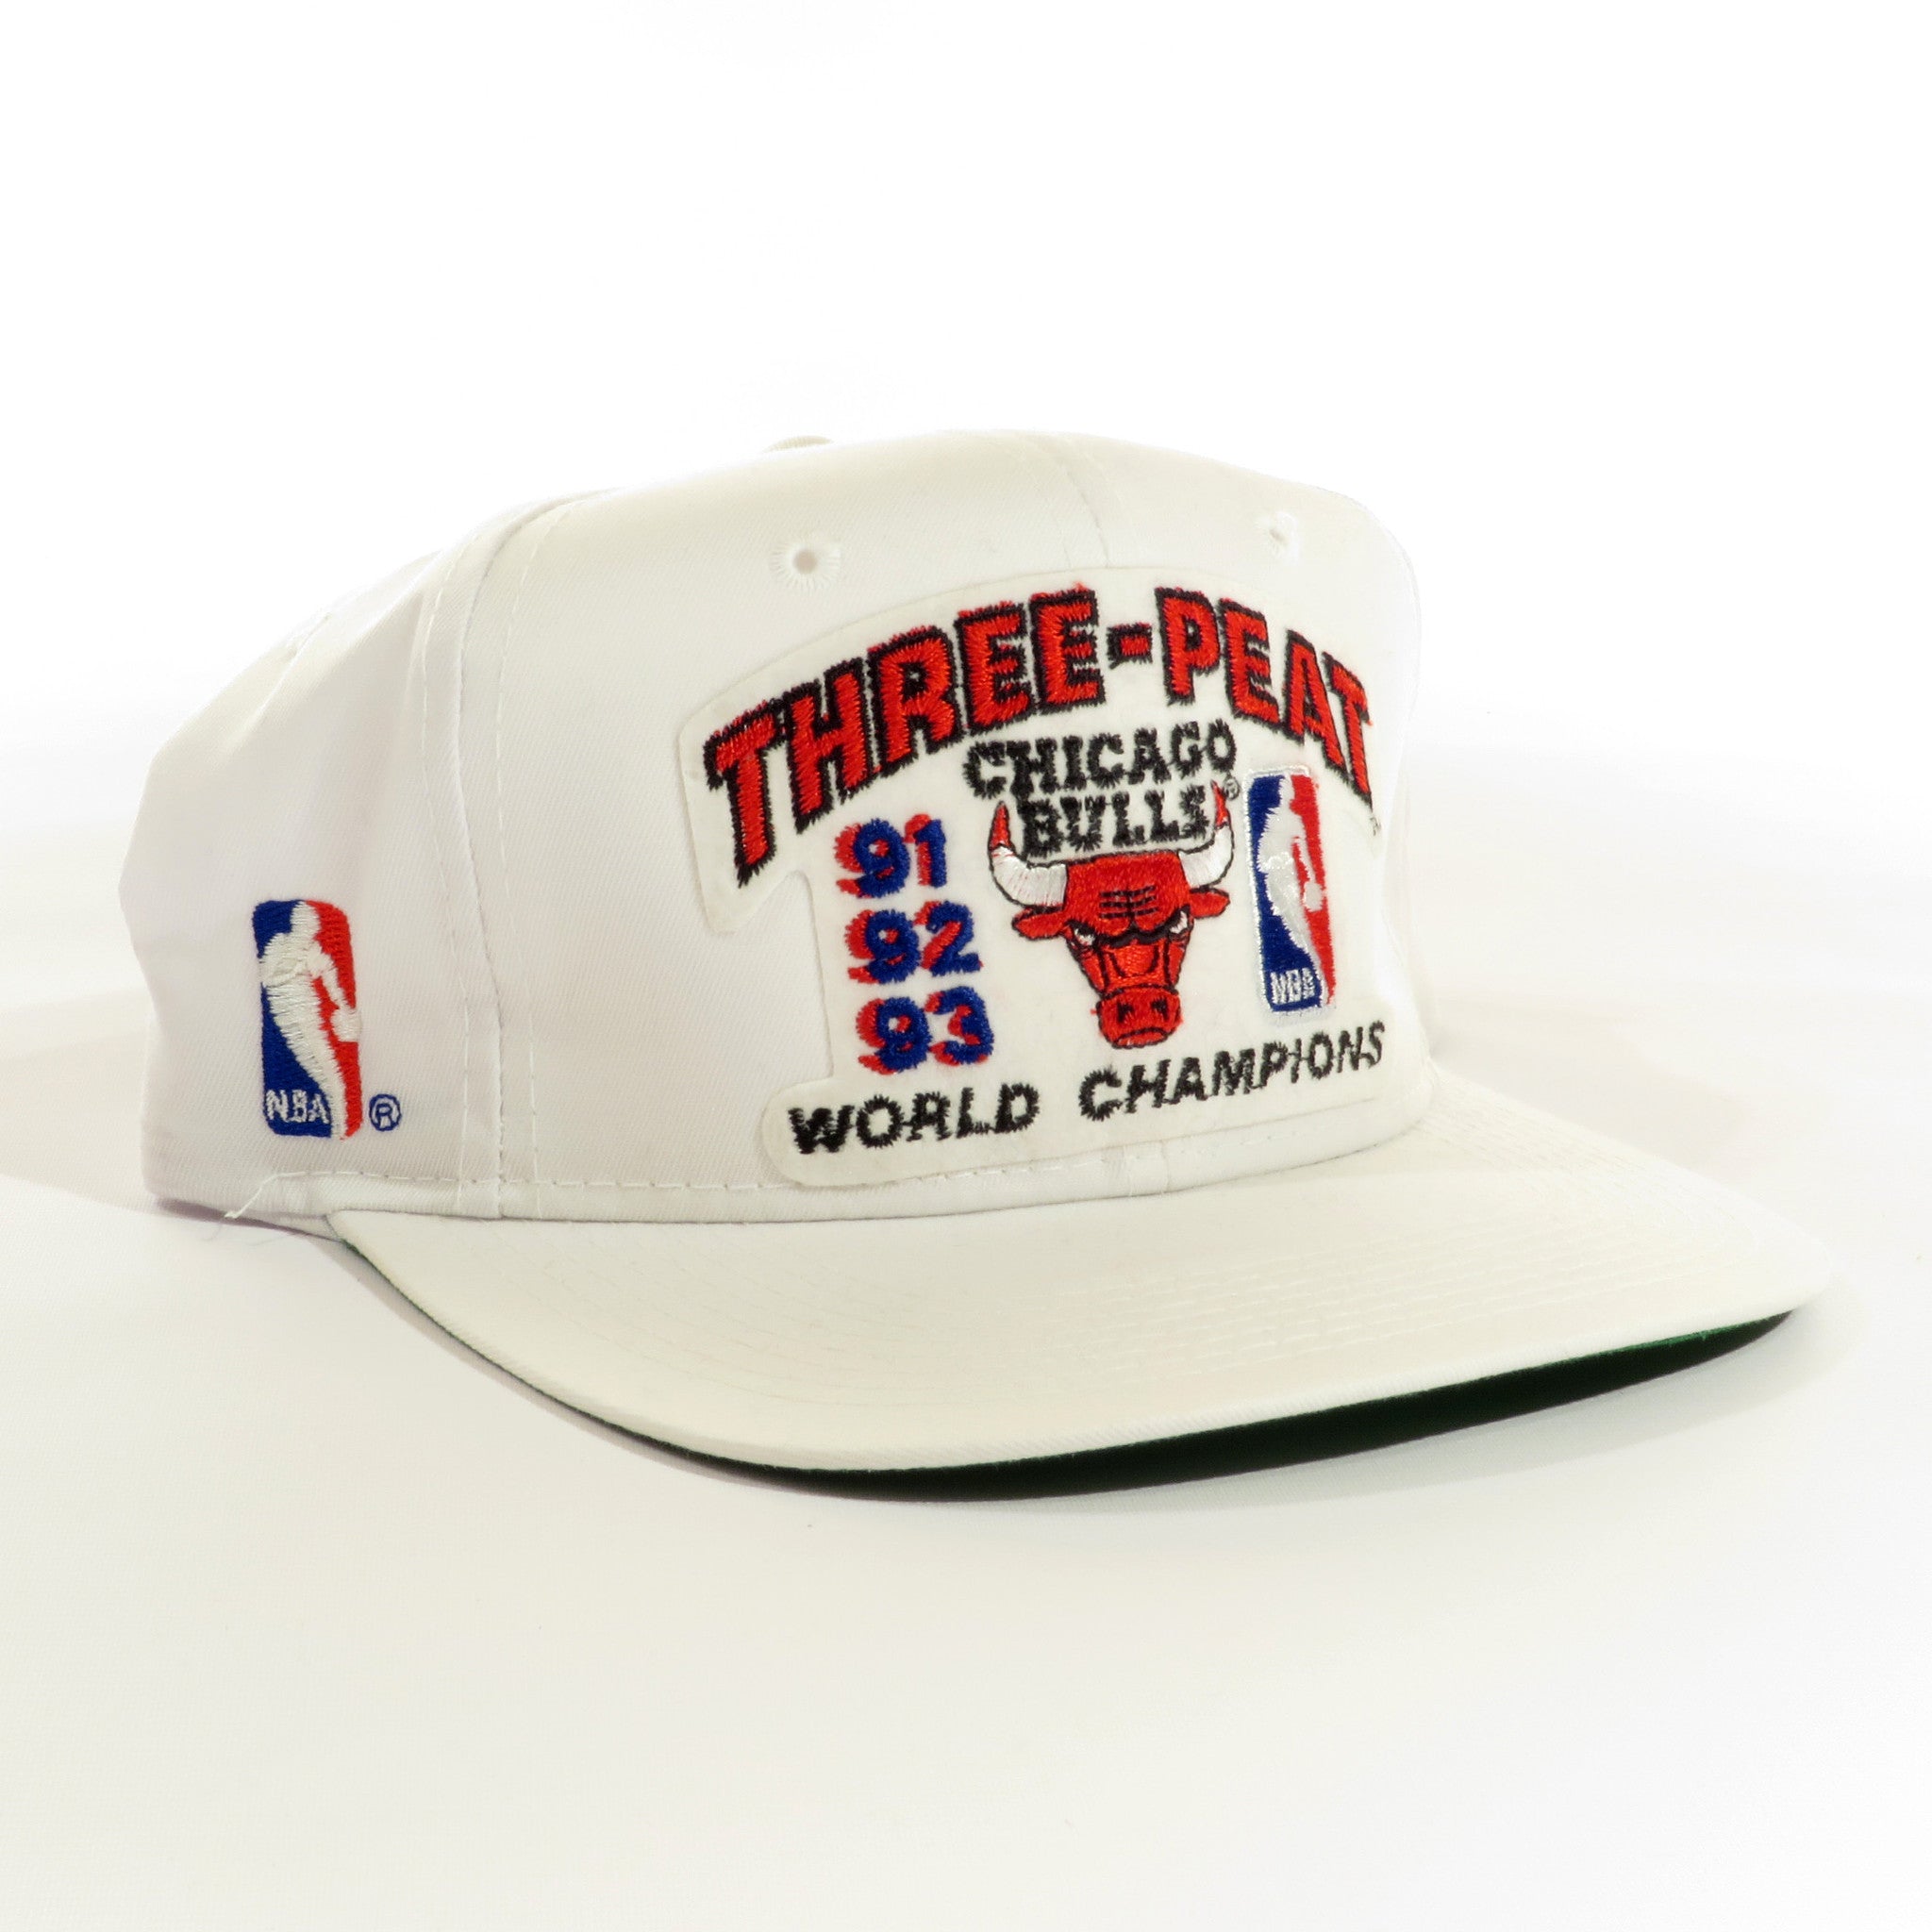 Chicago Bulls Three Peat World Champions Snapback Hat